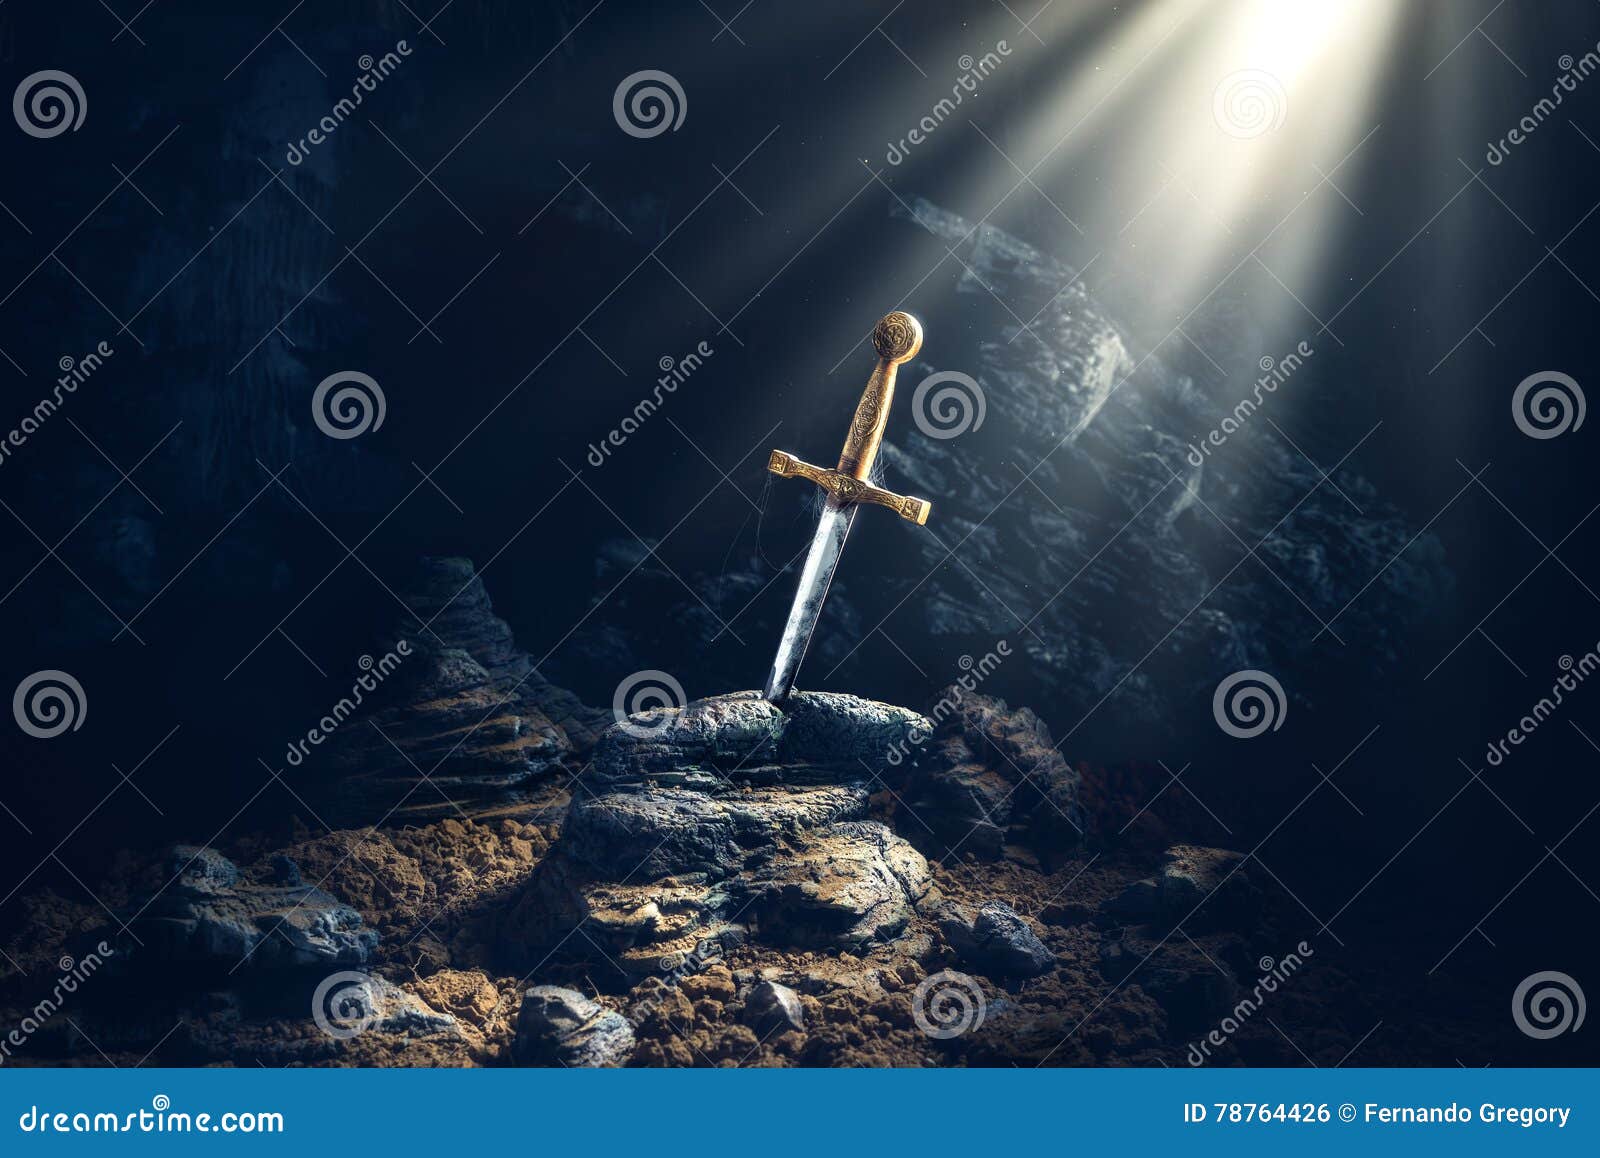 sword in the stone excalibur